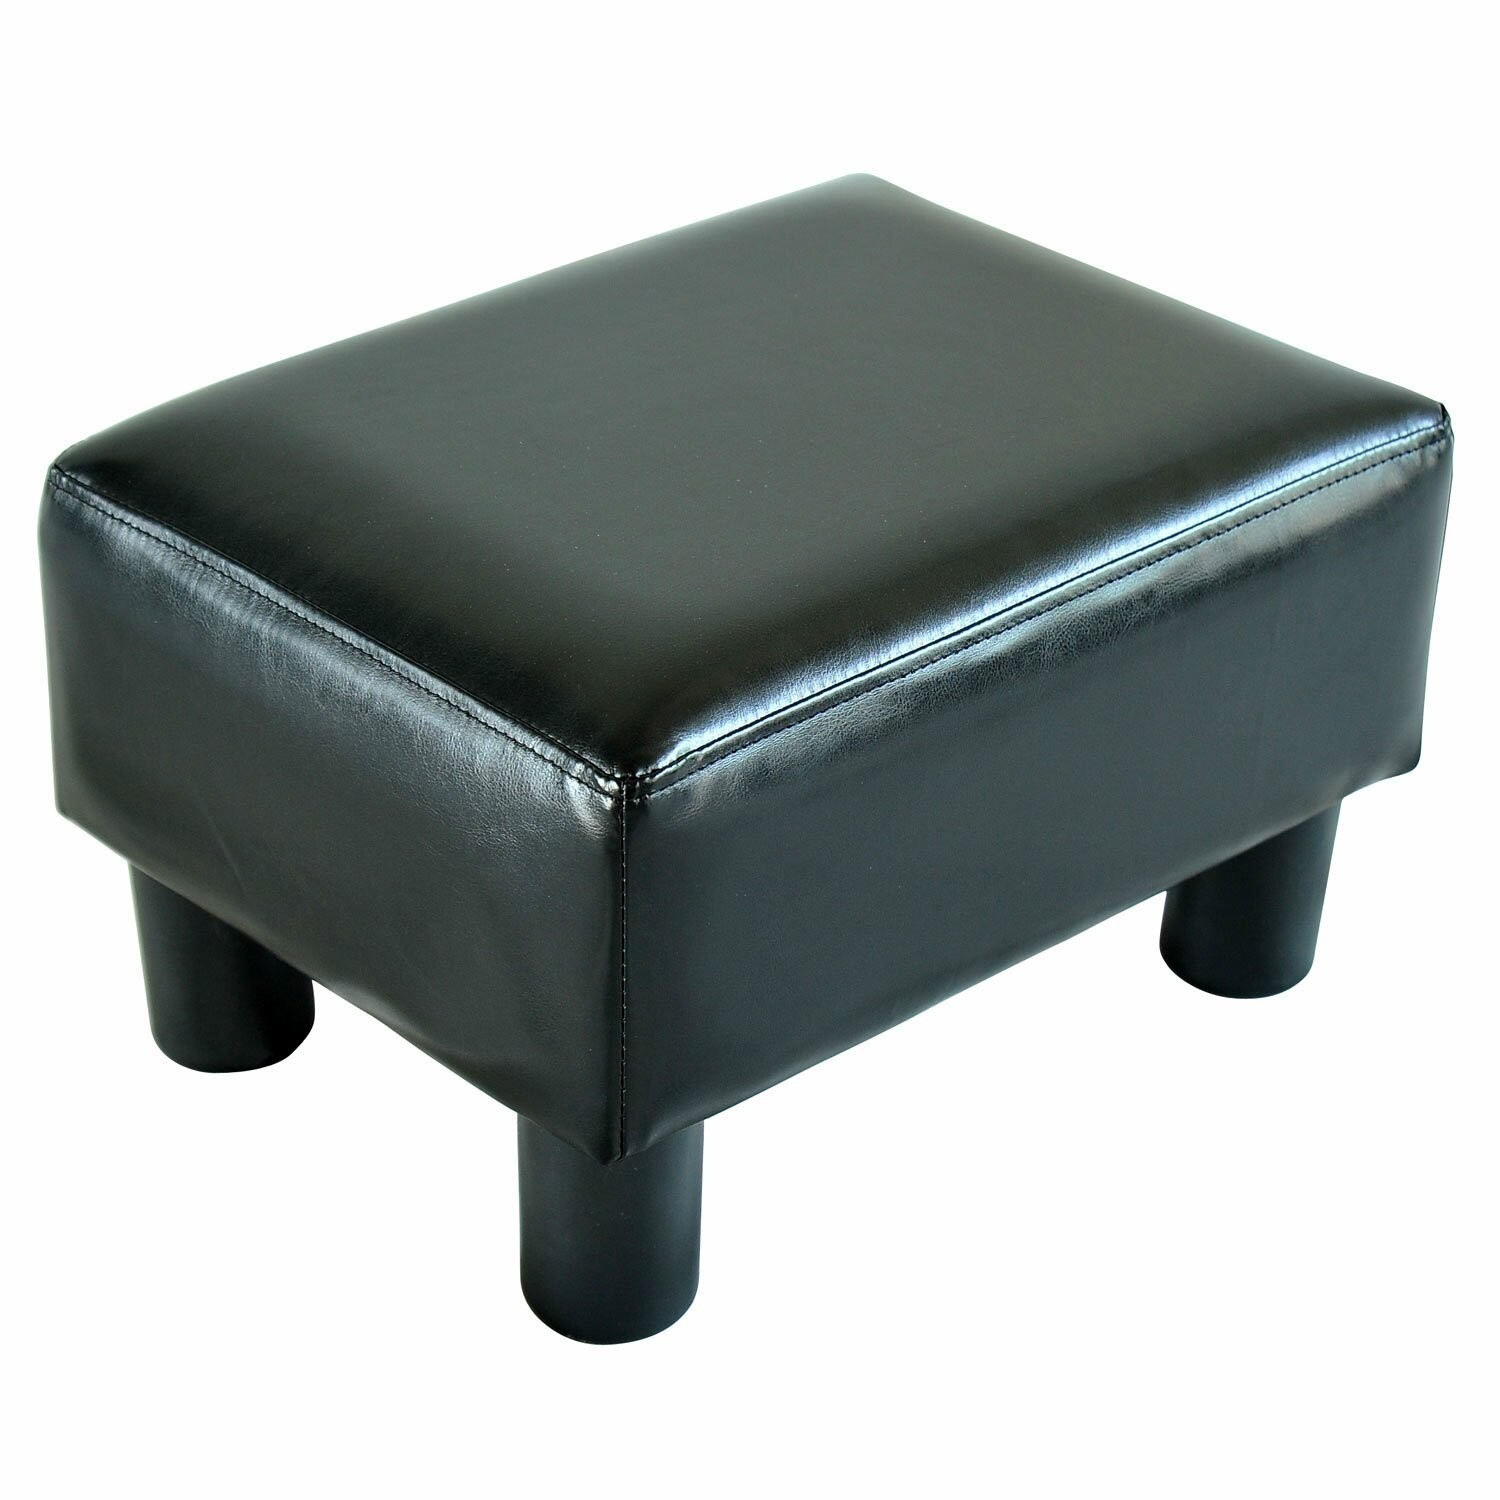 Homcom Modern Small Faux Leather Ottoman / Footrest Stool - Black